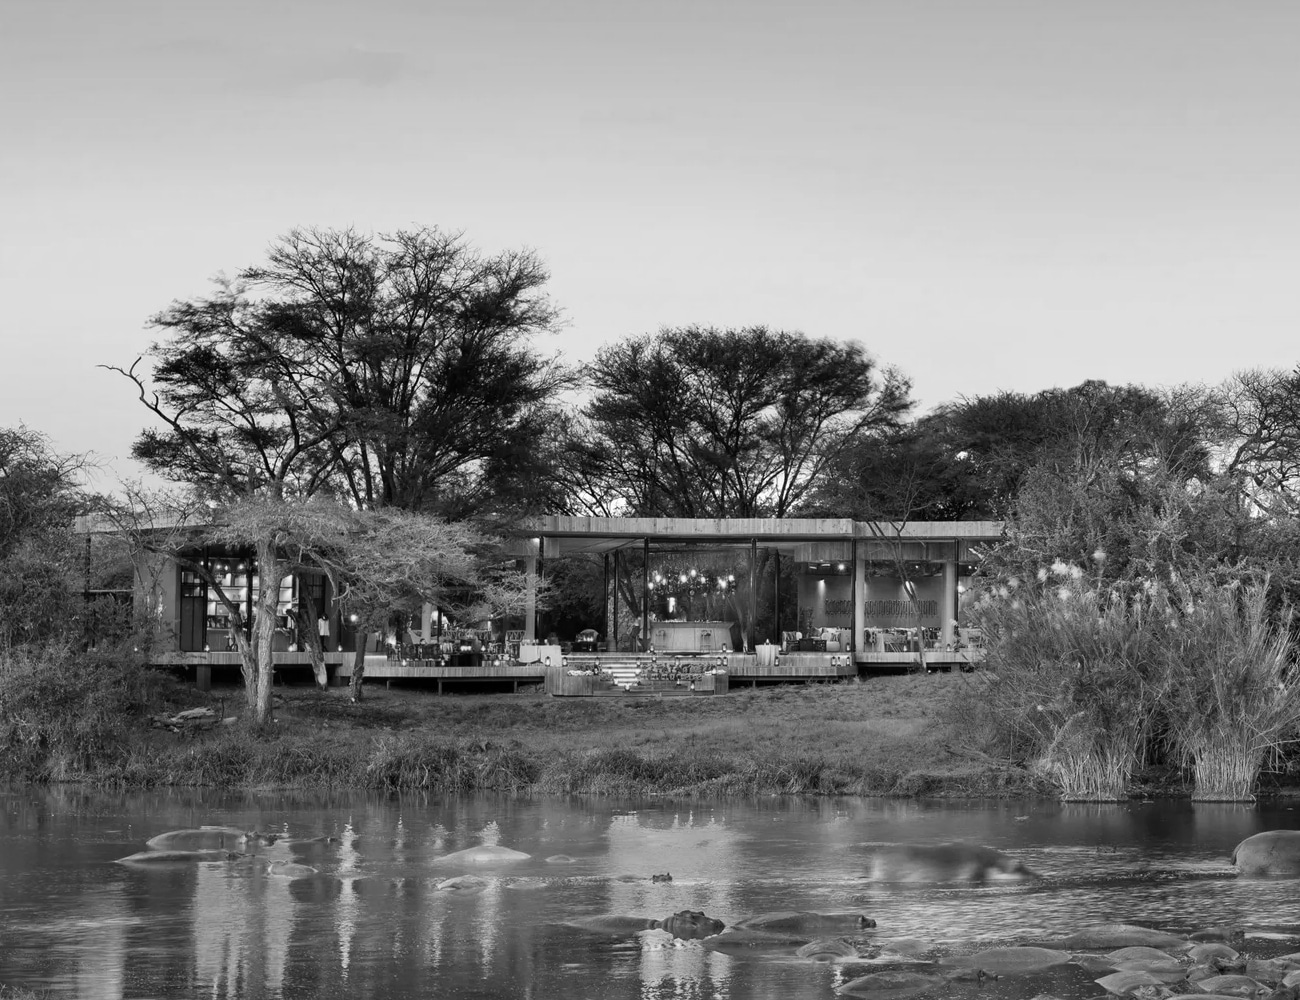 View of rumeti Serengeti River Lodge